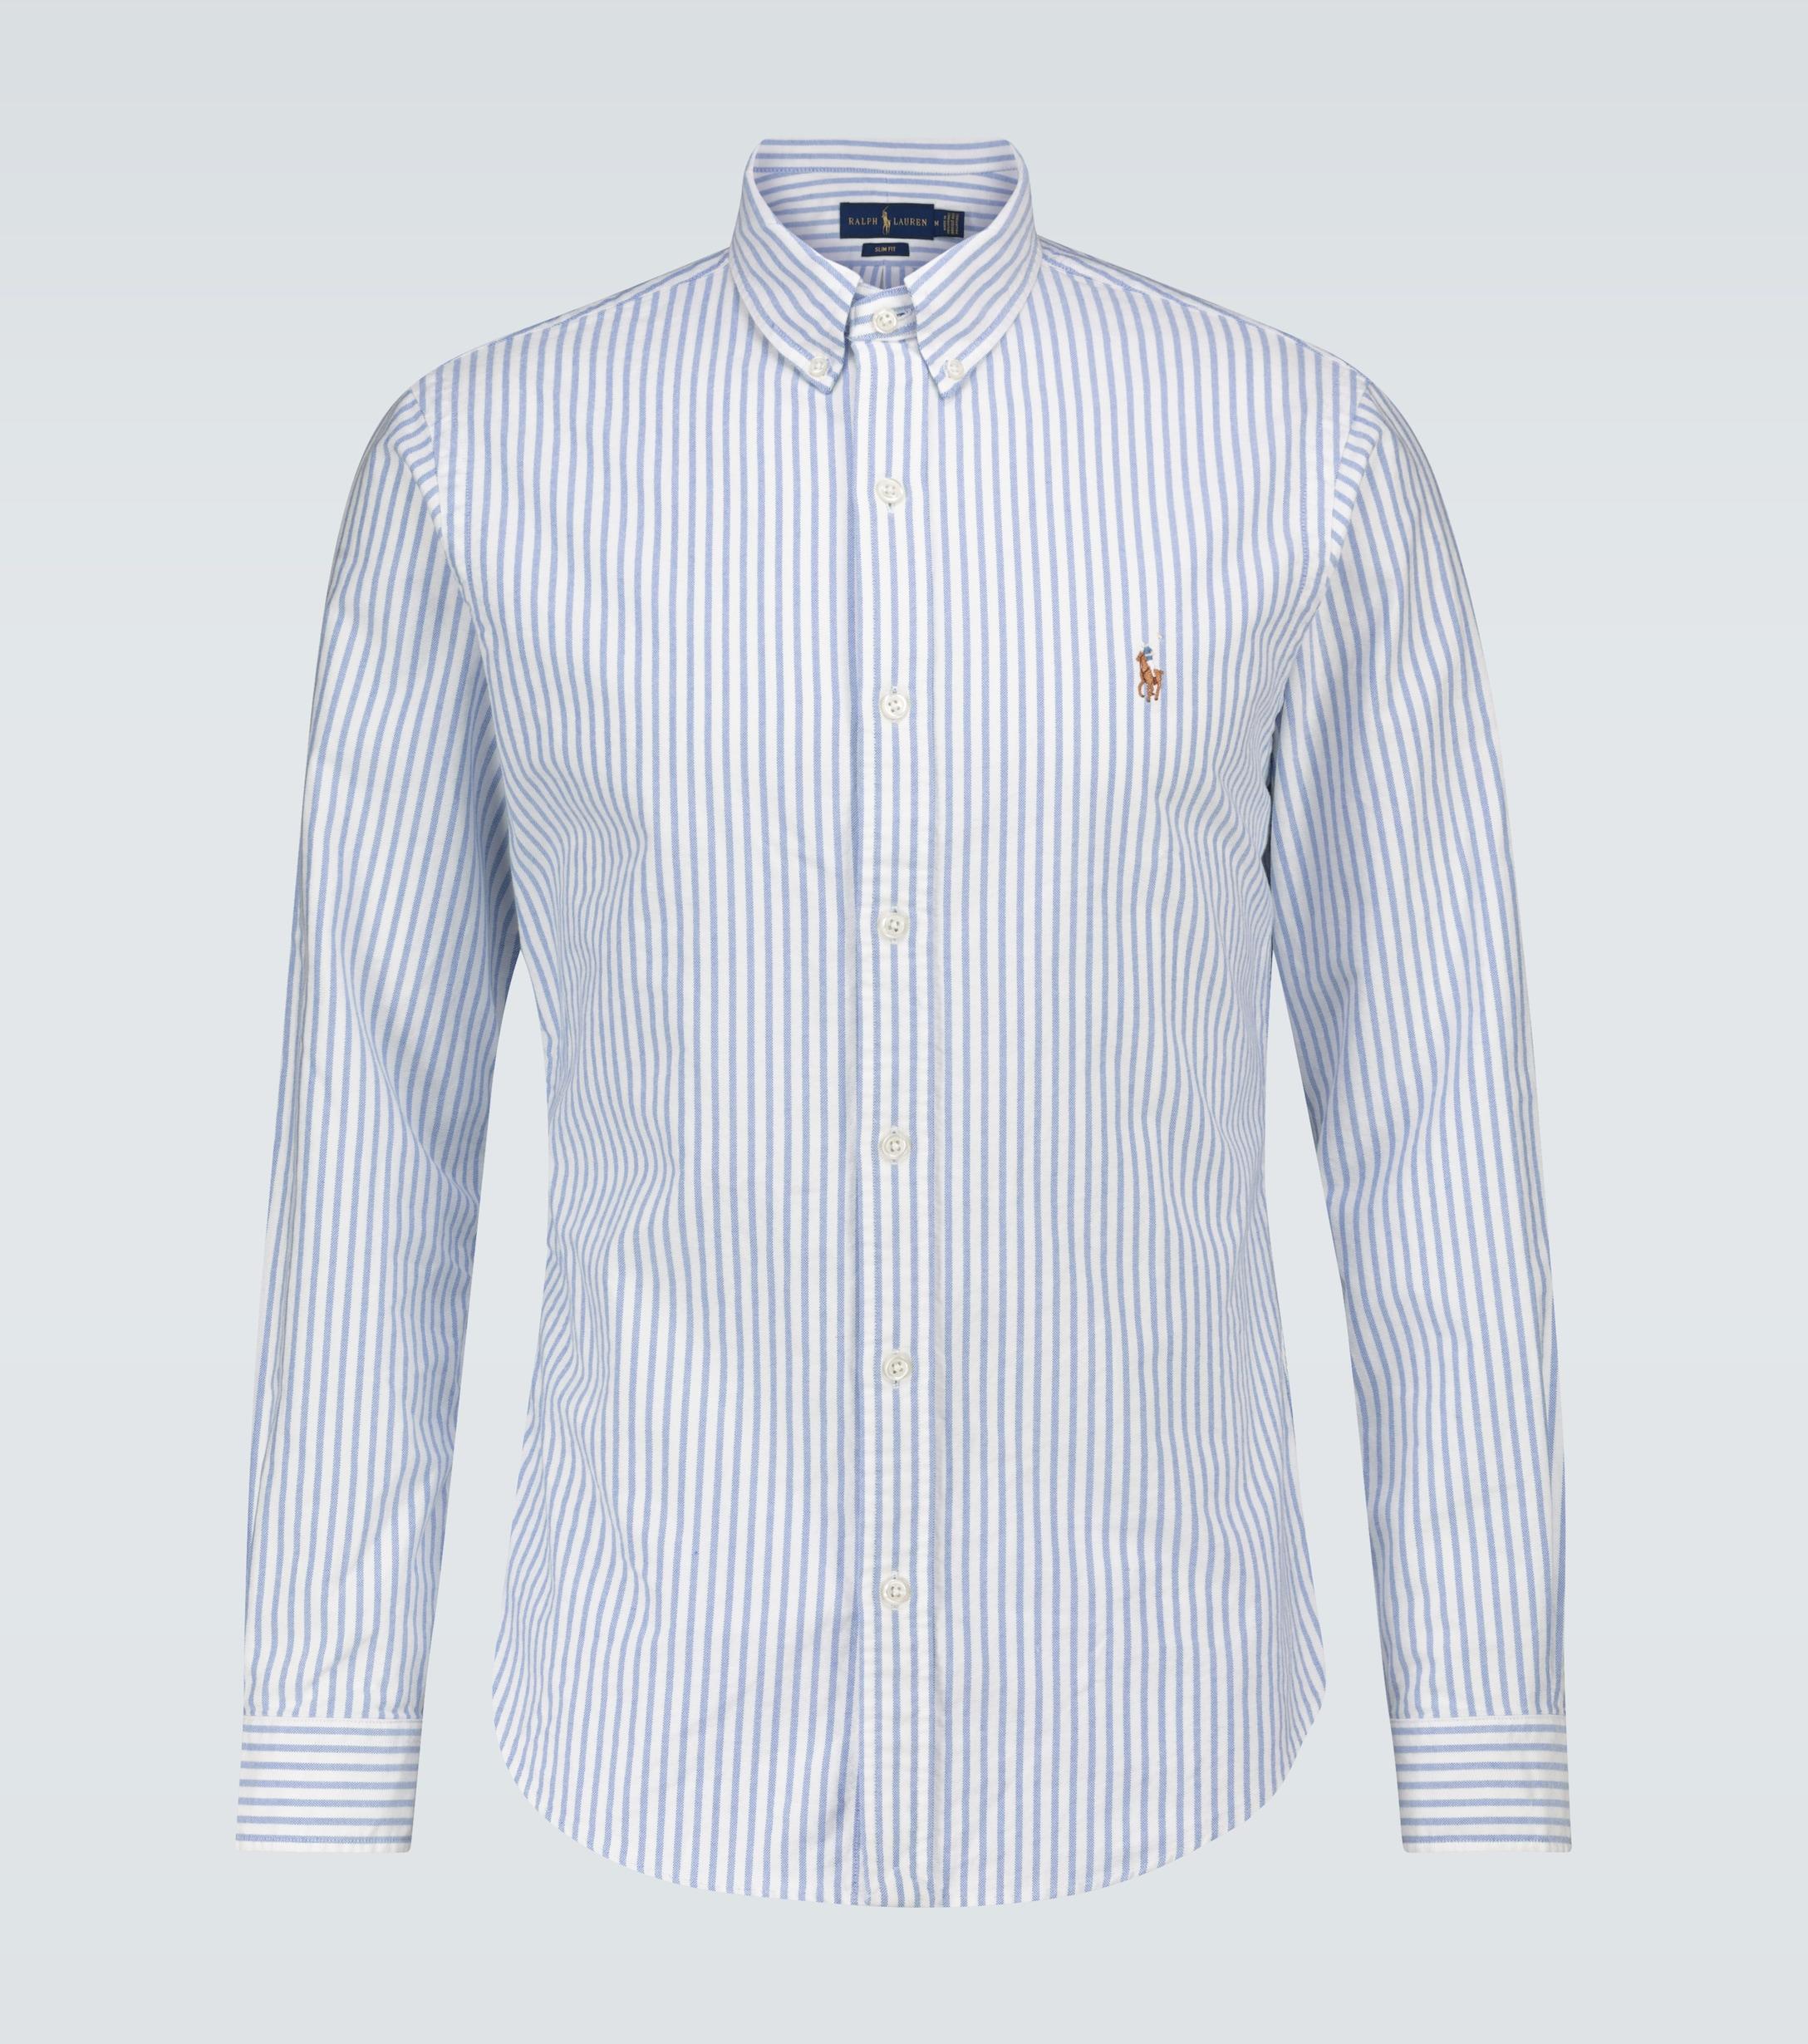 Polo Ralph Lauren Long-sleeved Striped Shirt in Blue for Men - Lyst